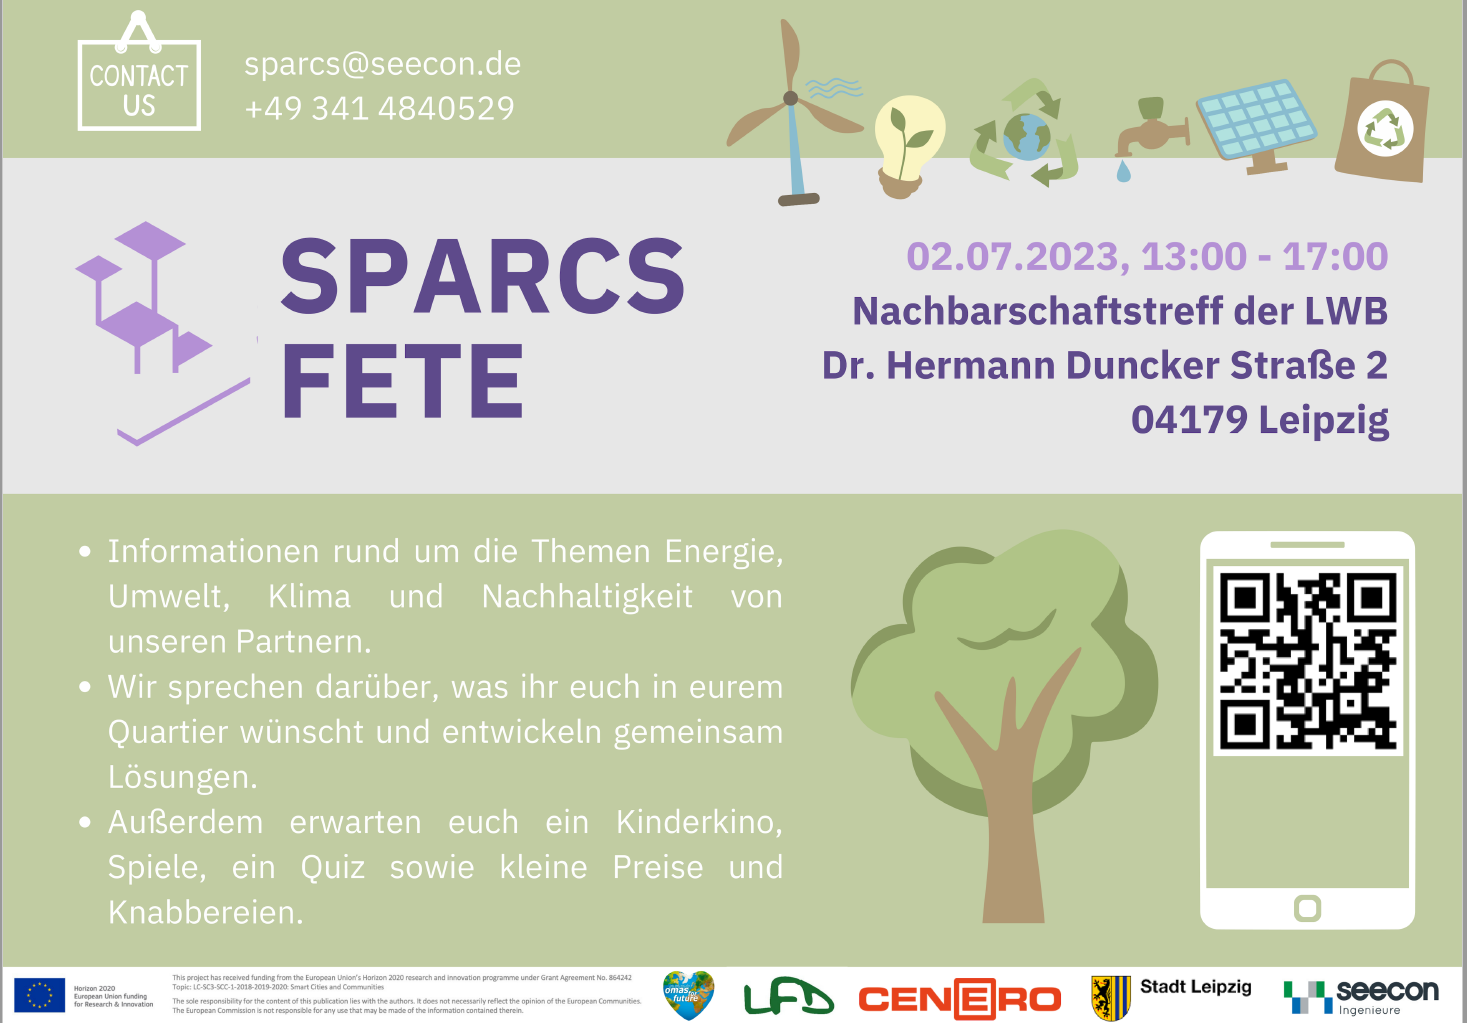 SPARCS Celebration in Leipzig